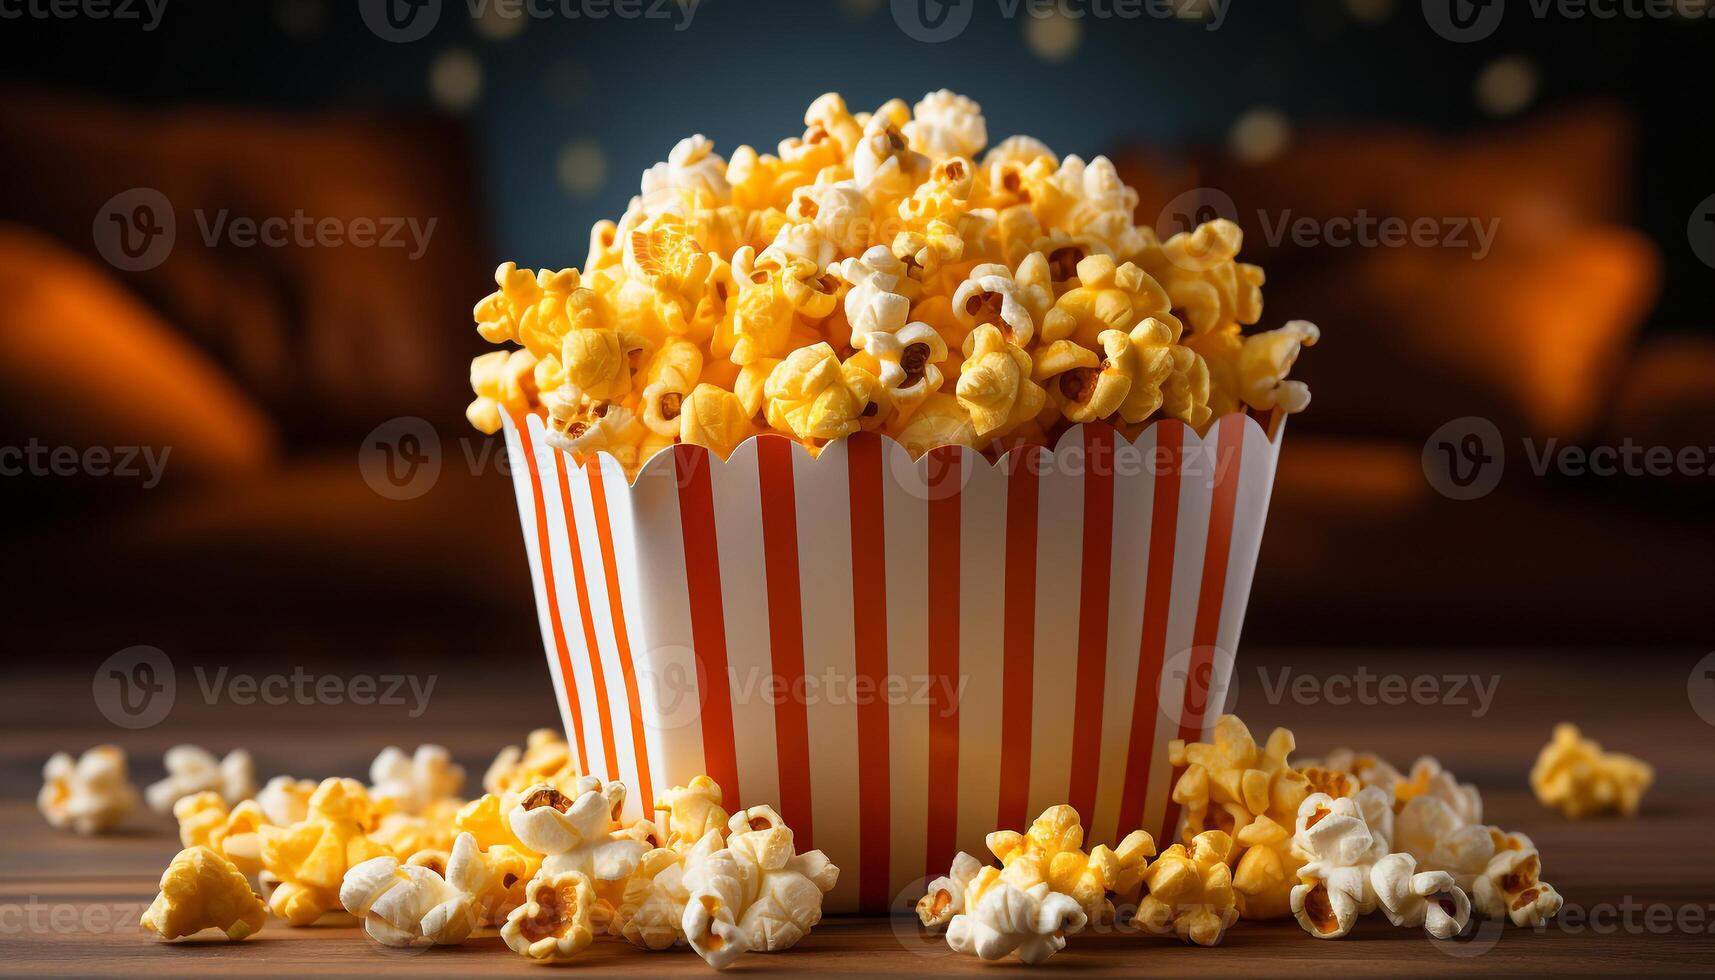 AI generated Watching movie, eating popcorn, enjoying the refreshing sweetness generated by AI photo